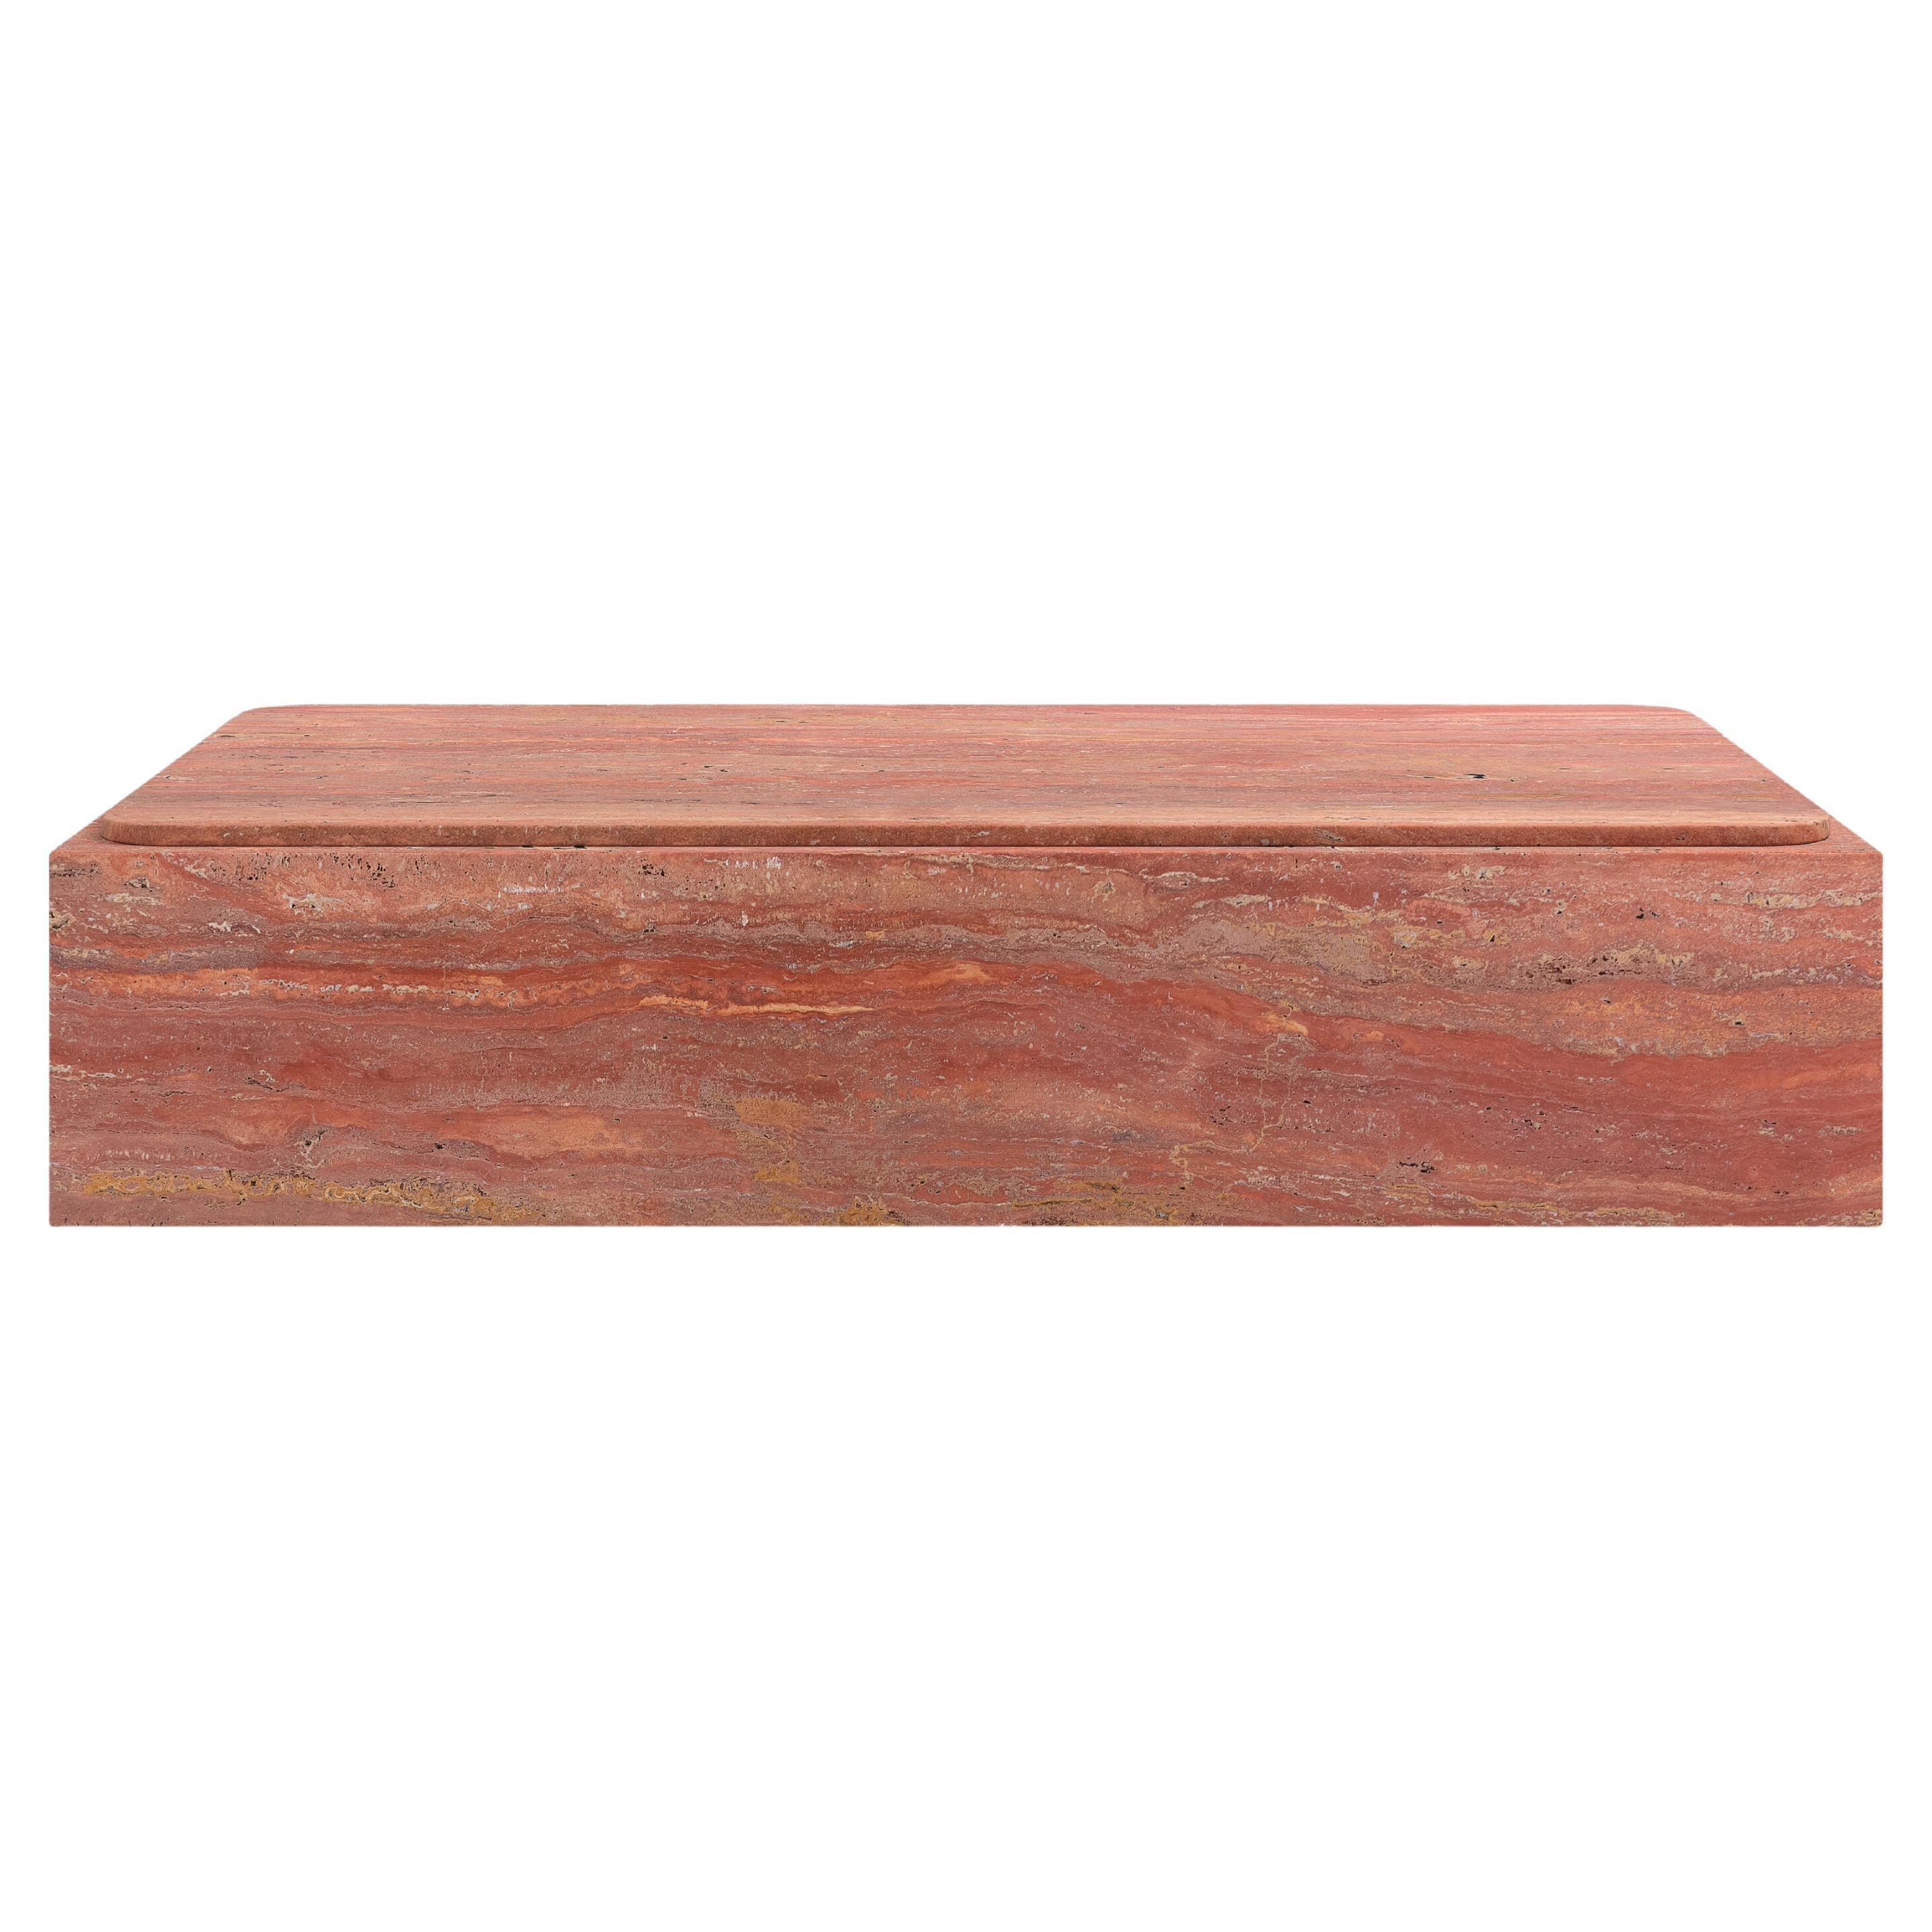 FORM(LA) Cubo Rectangle Plinth Coffee Table 72”L x 42”W x 13”H Travertino Rosso For Sale